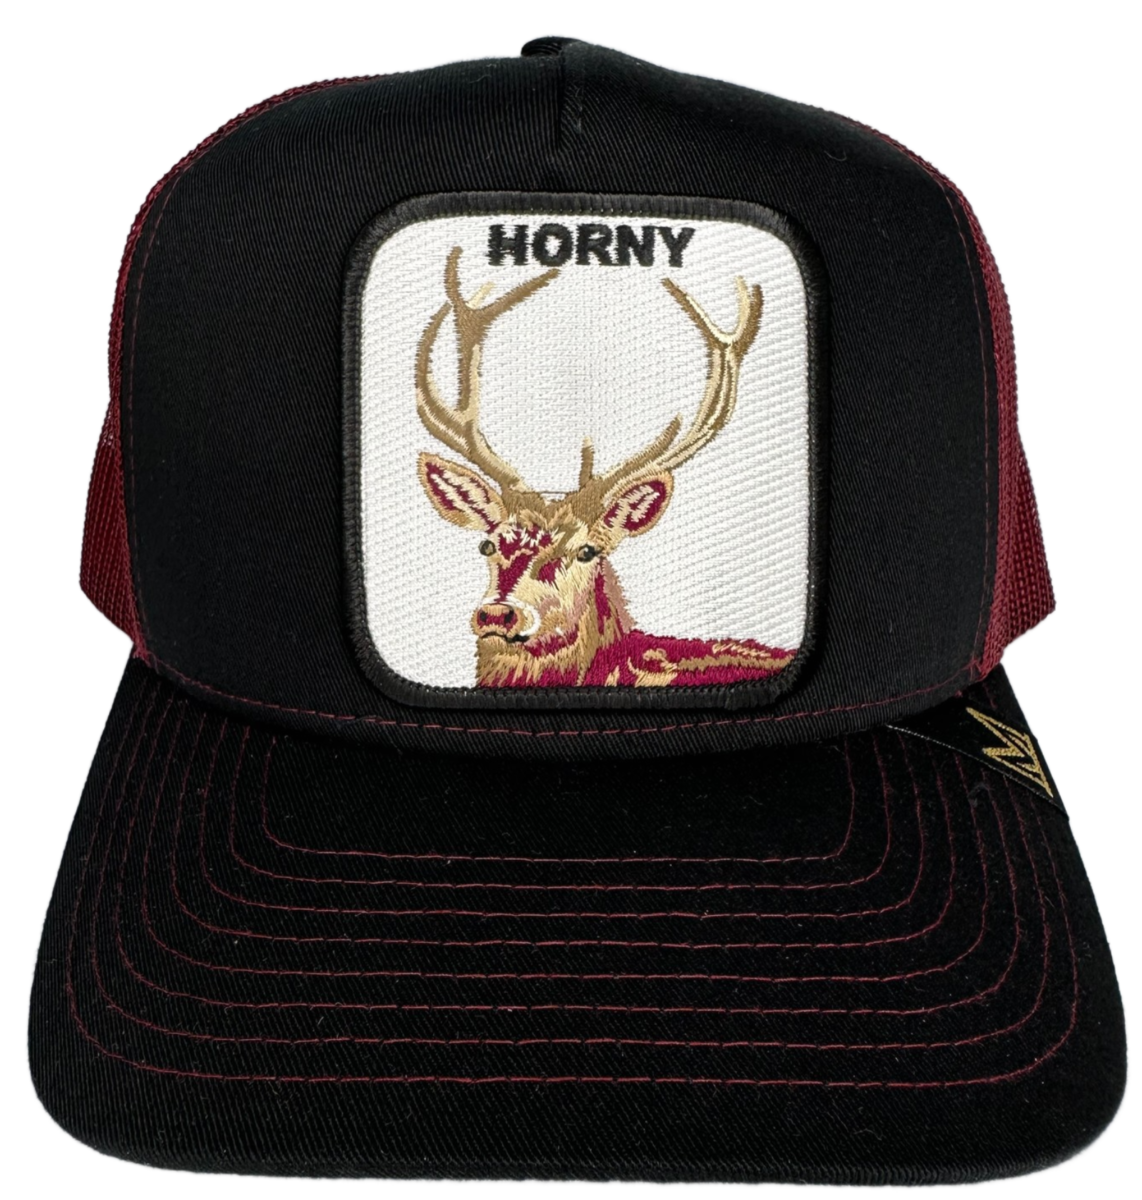 MV Dad Hats - Horny Trucker Hat - Black/Maroon